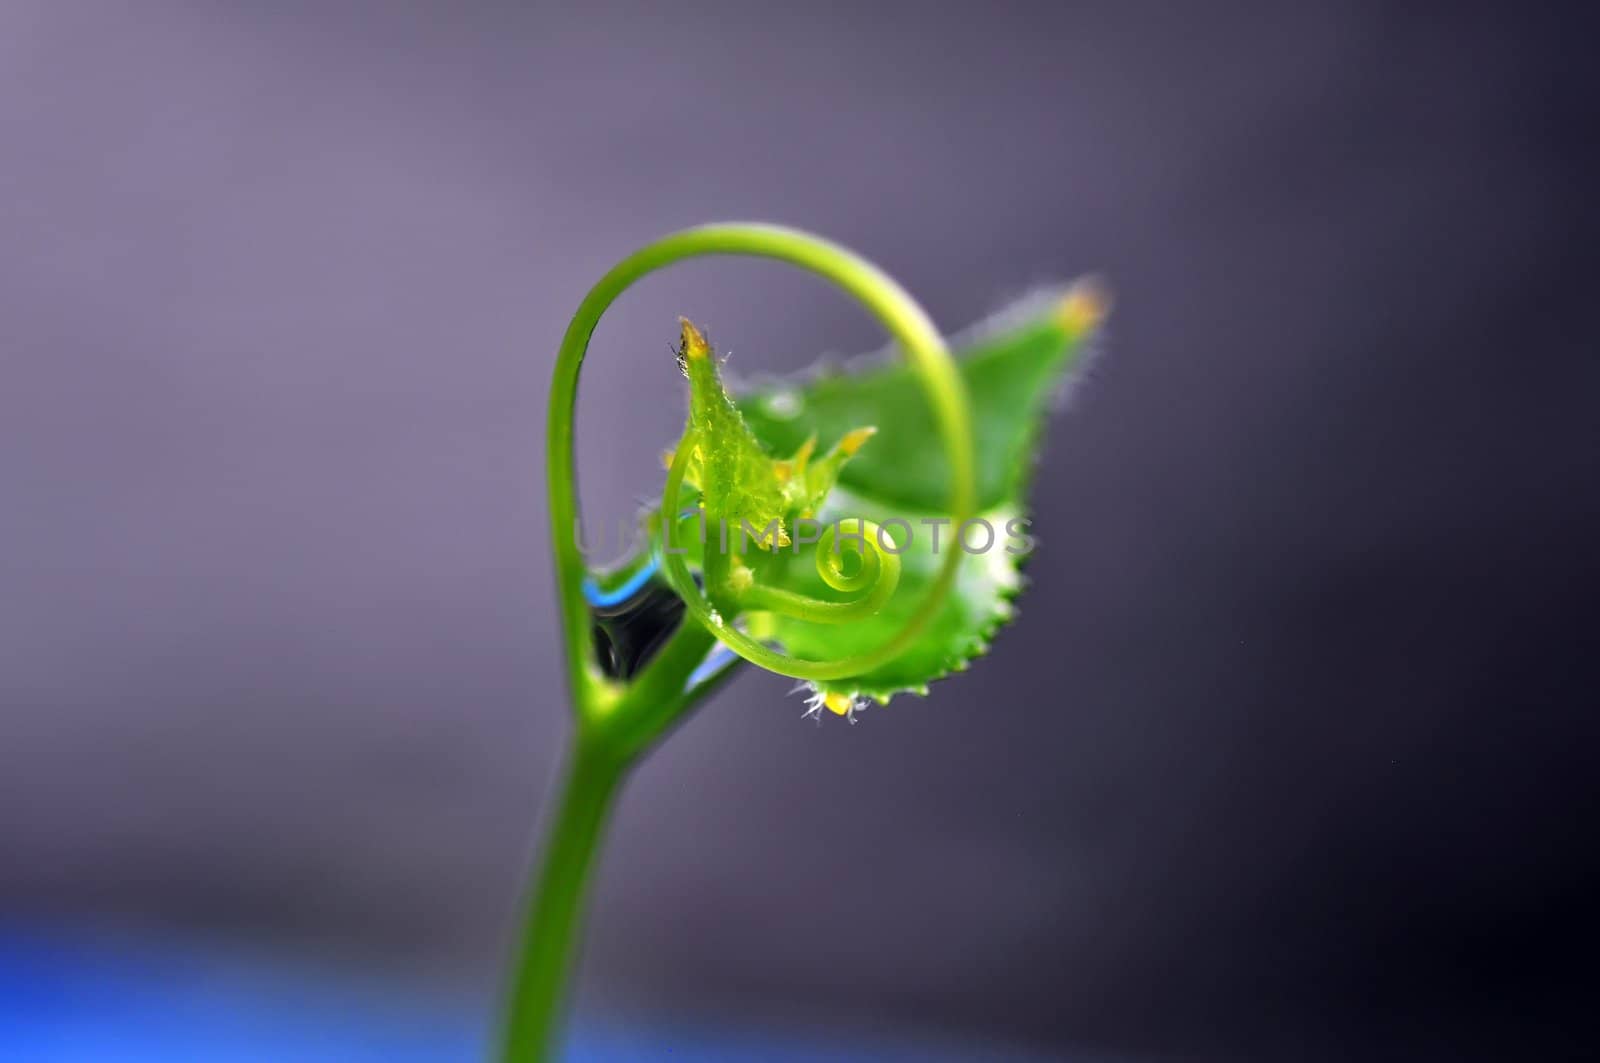 Green ivy closeup